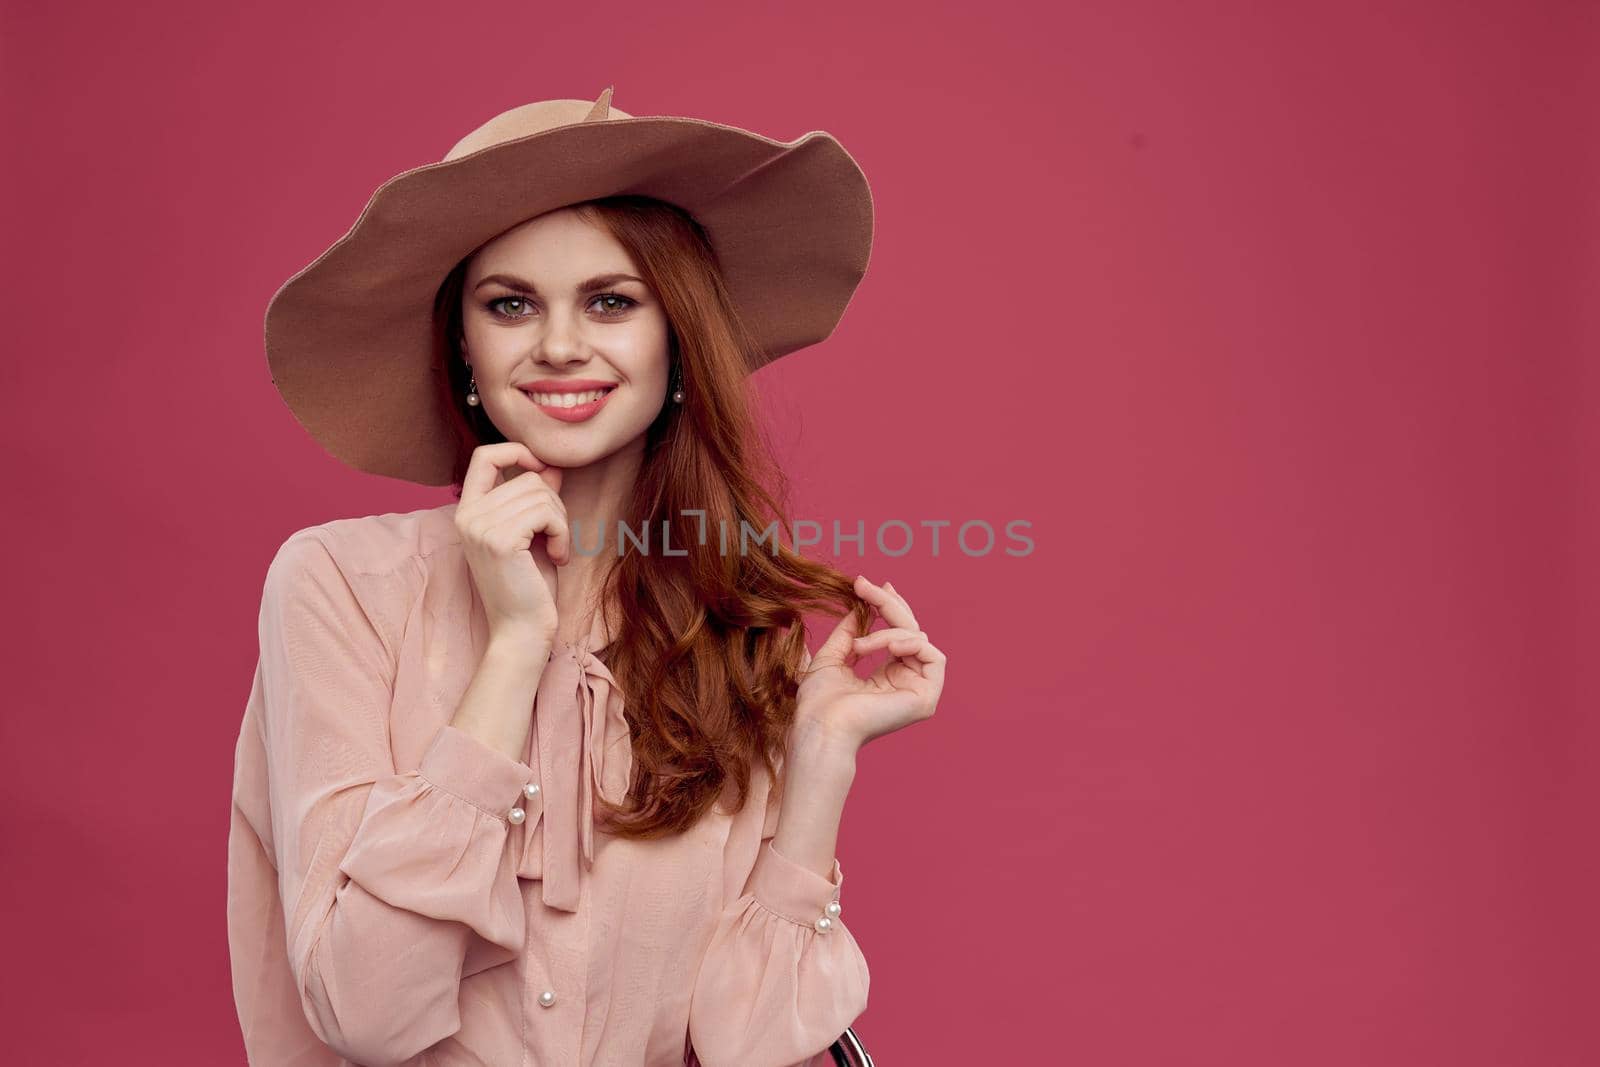 pretty woman sunglasses modern style charm pink background. High quality photo